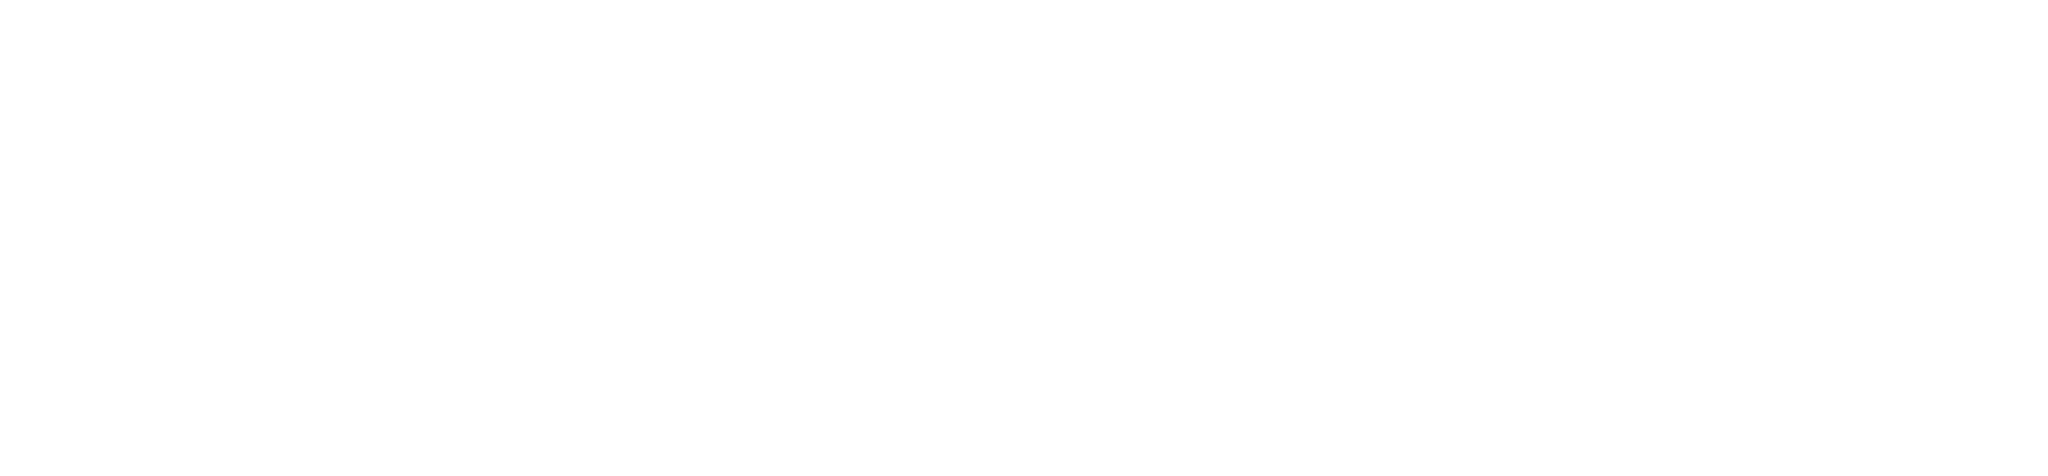 Tom Nikkola Strength + Conditioning